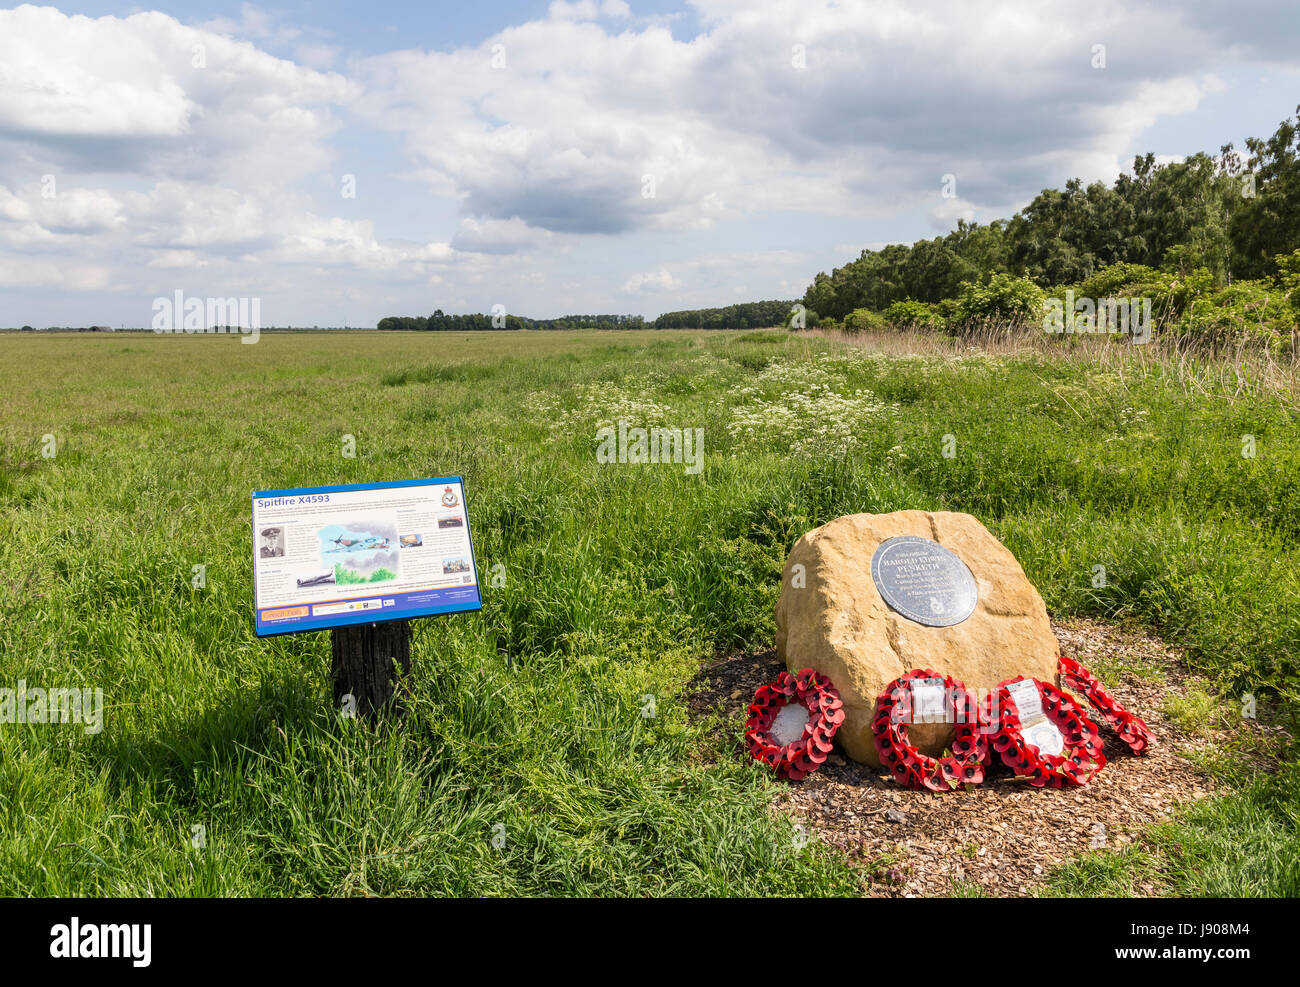 Stone memorial to RAF Wittering Pilot Officer Harold Edwin Penketh Stock Photo